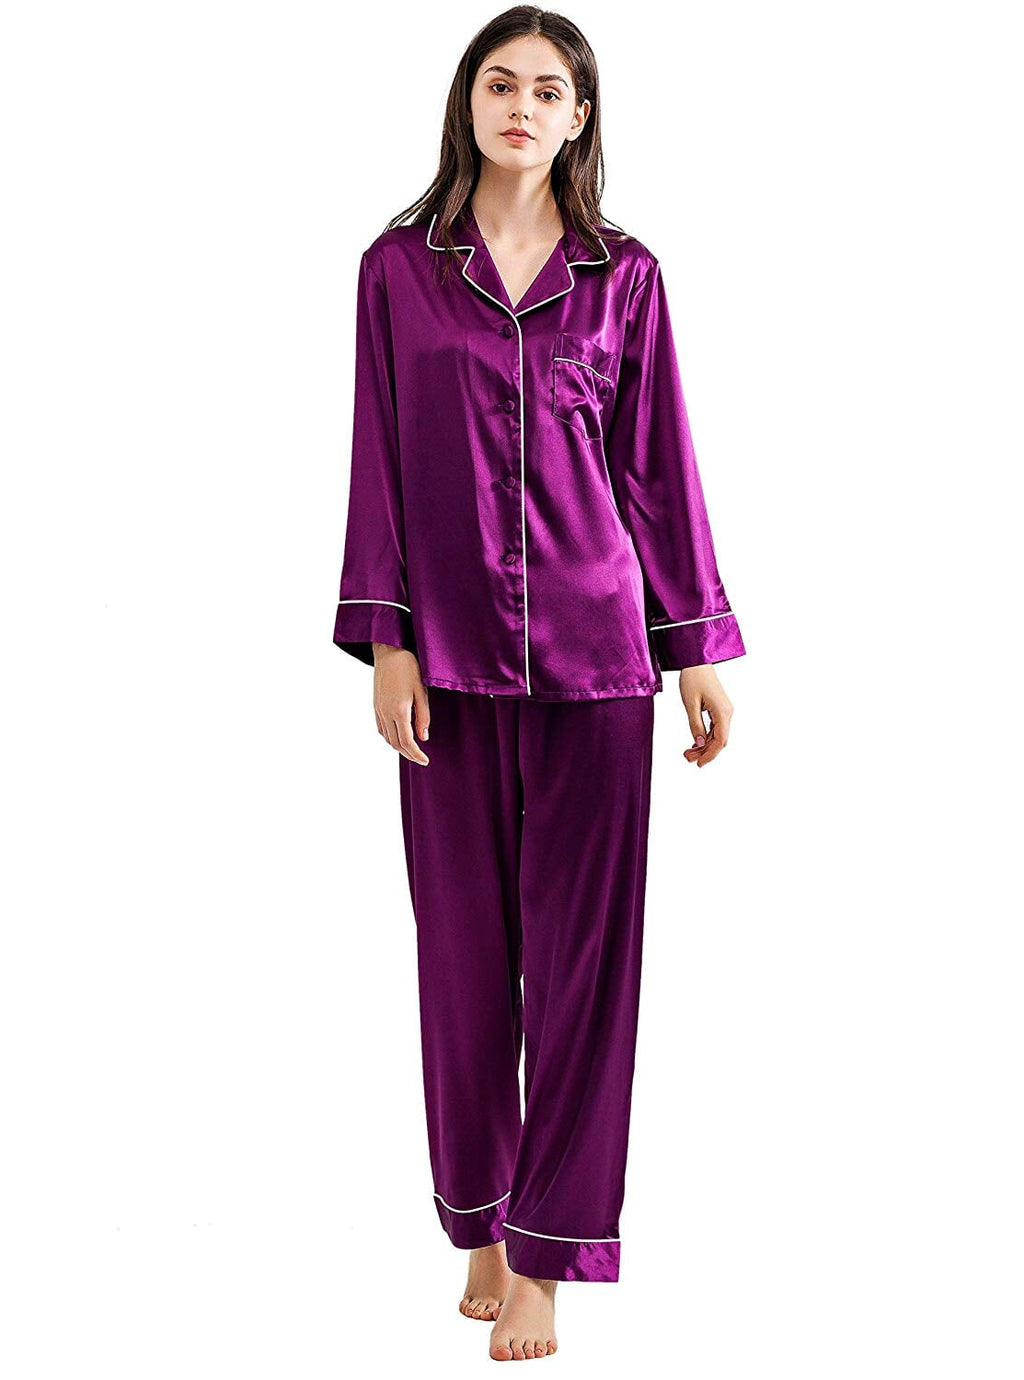 velvet night suits online